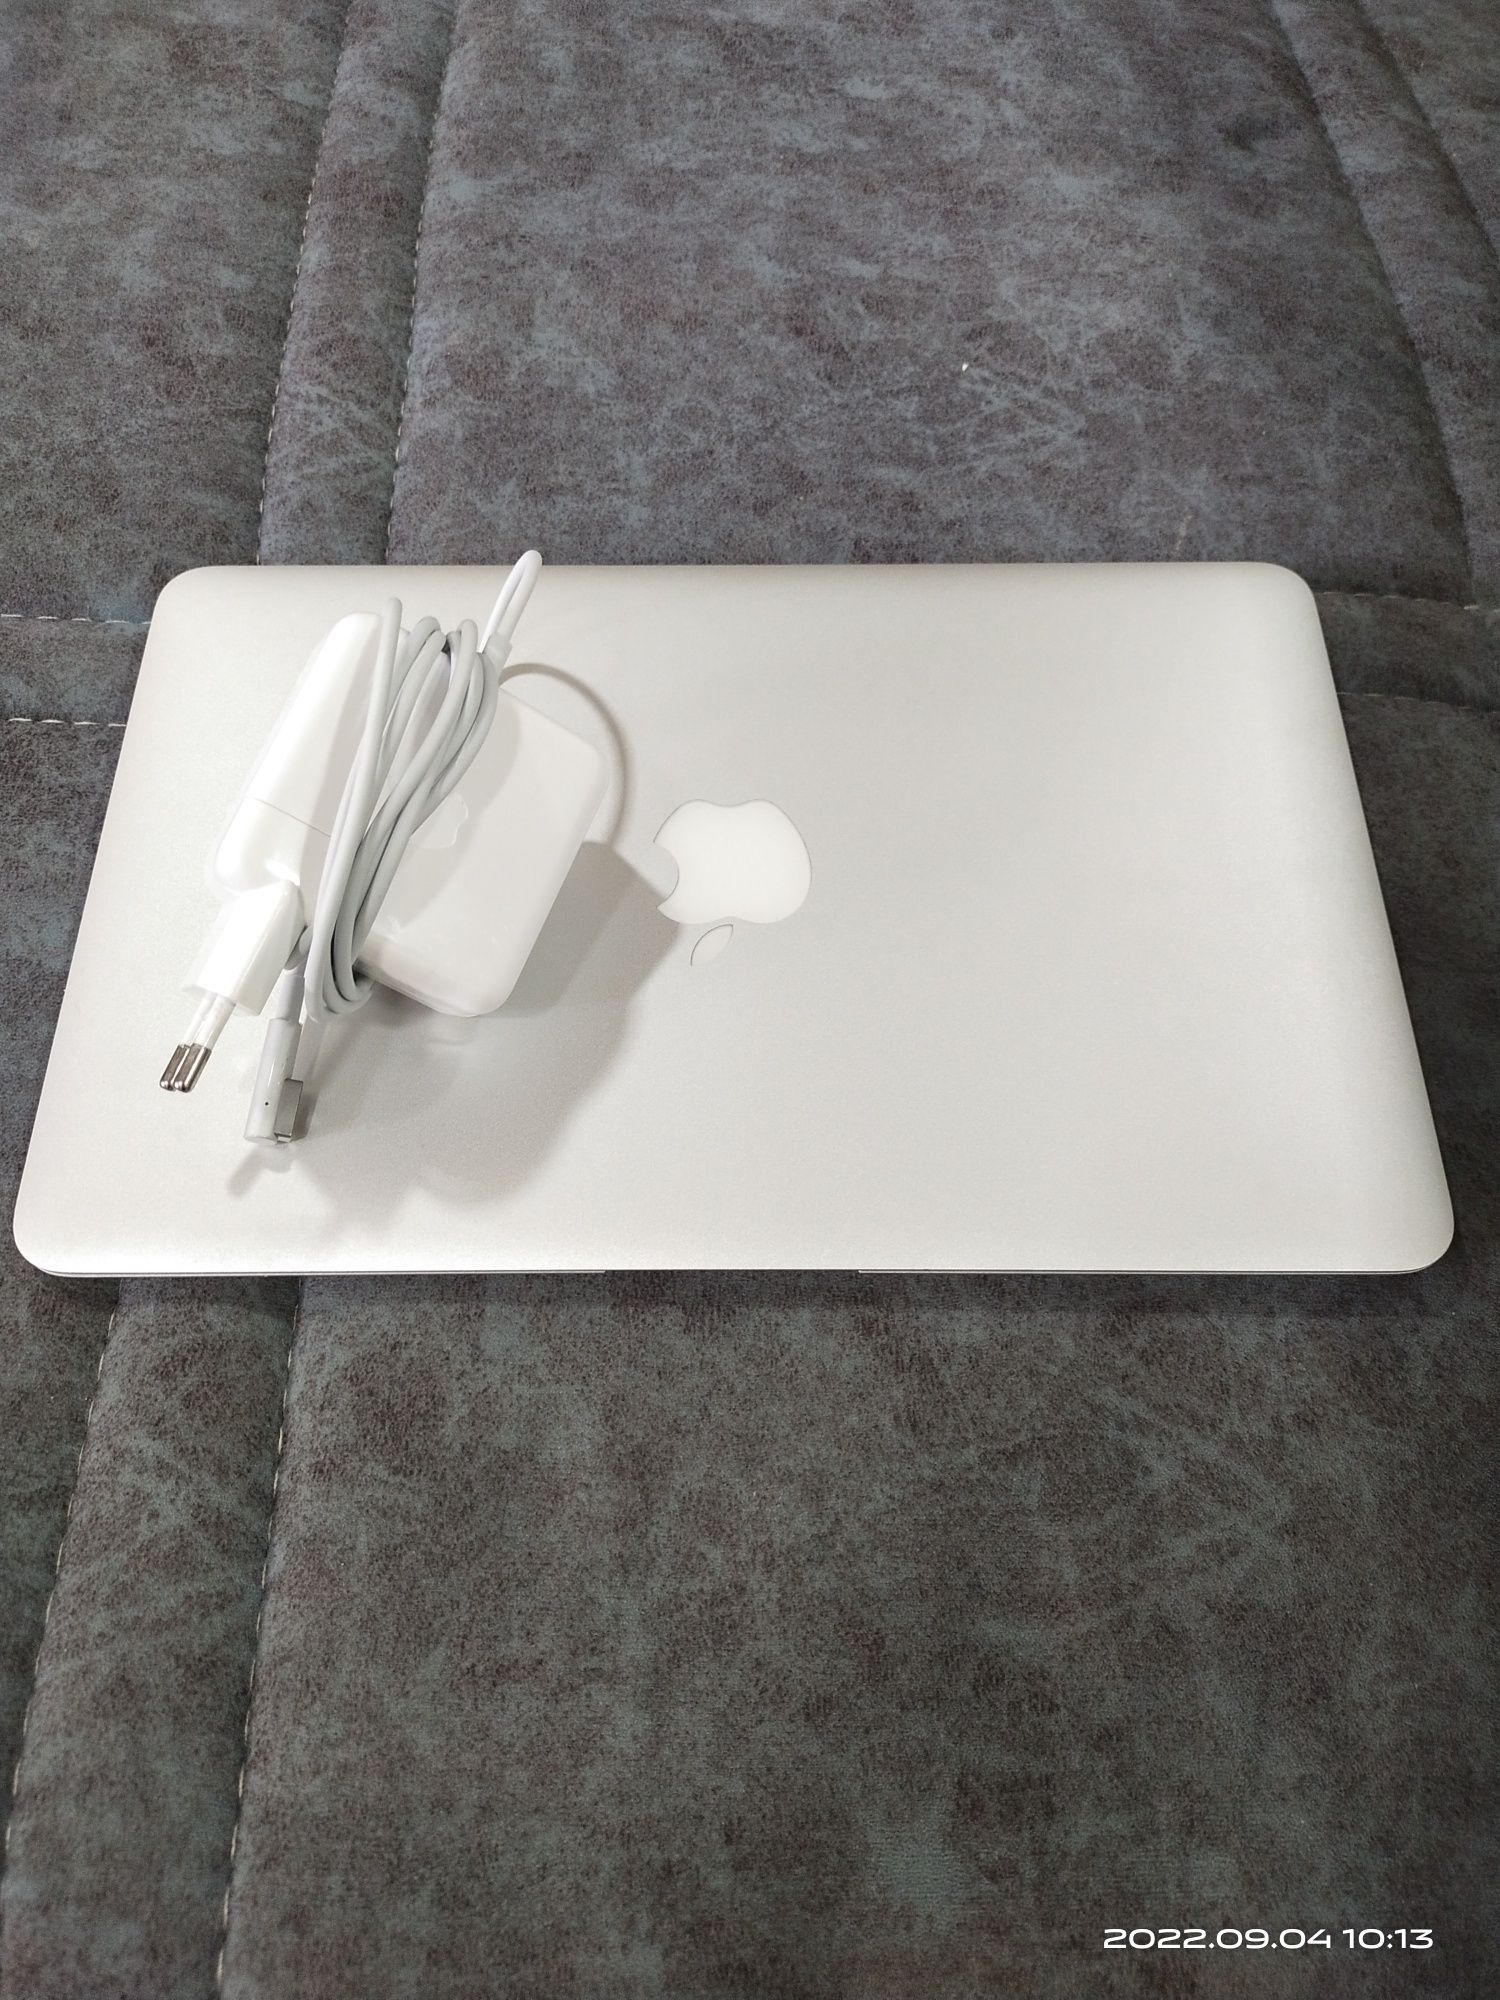 MacBook Air 2011 intel core i5+galaxy tab s